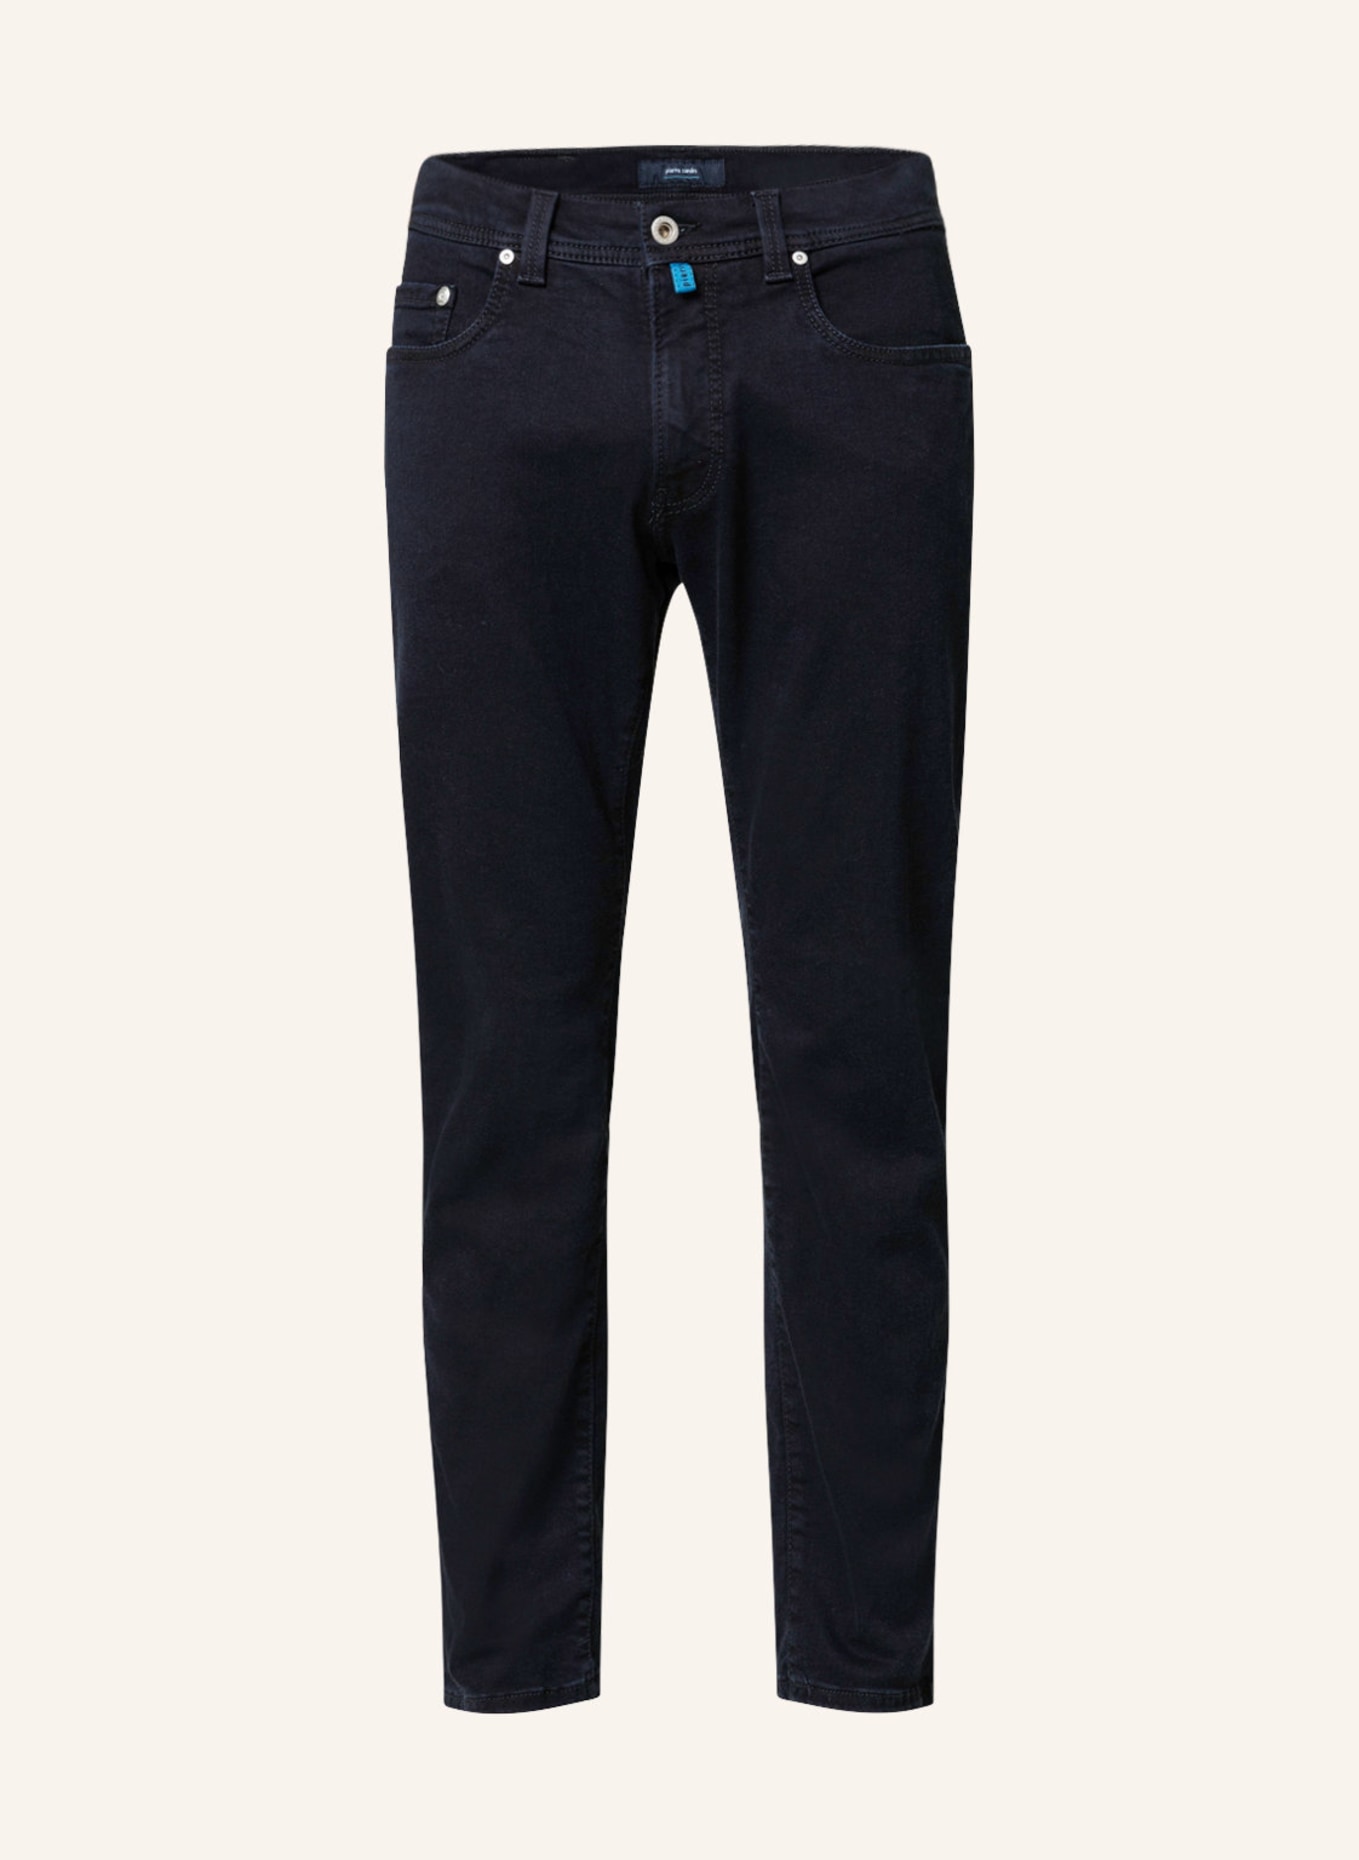 pierre cardin Jeans LYON FUTUREFLEX Tapered Fit , Farbe: 6802 blue/black used (Bild 1)